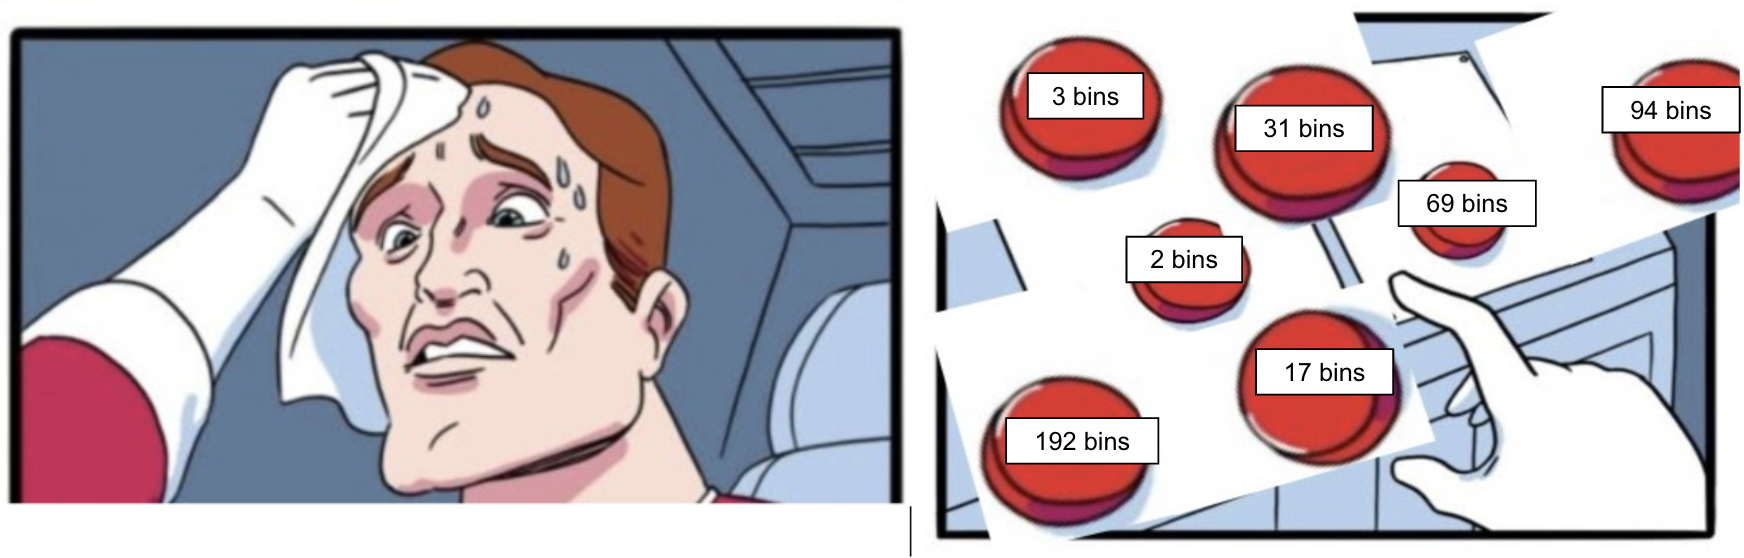 How Many Bins?